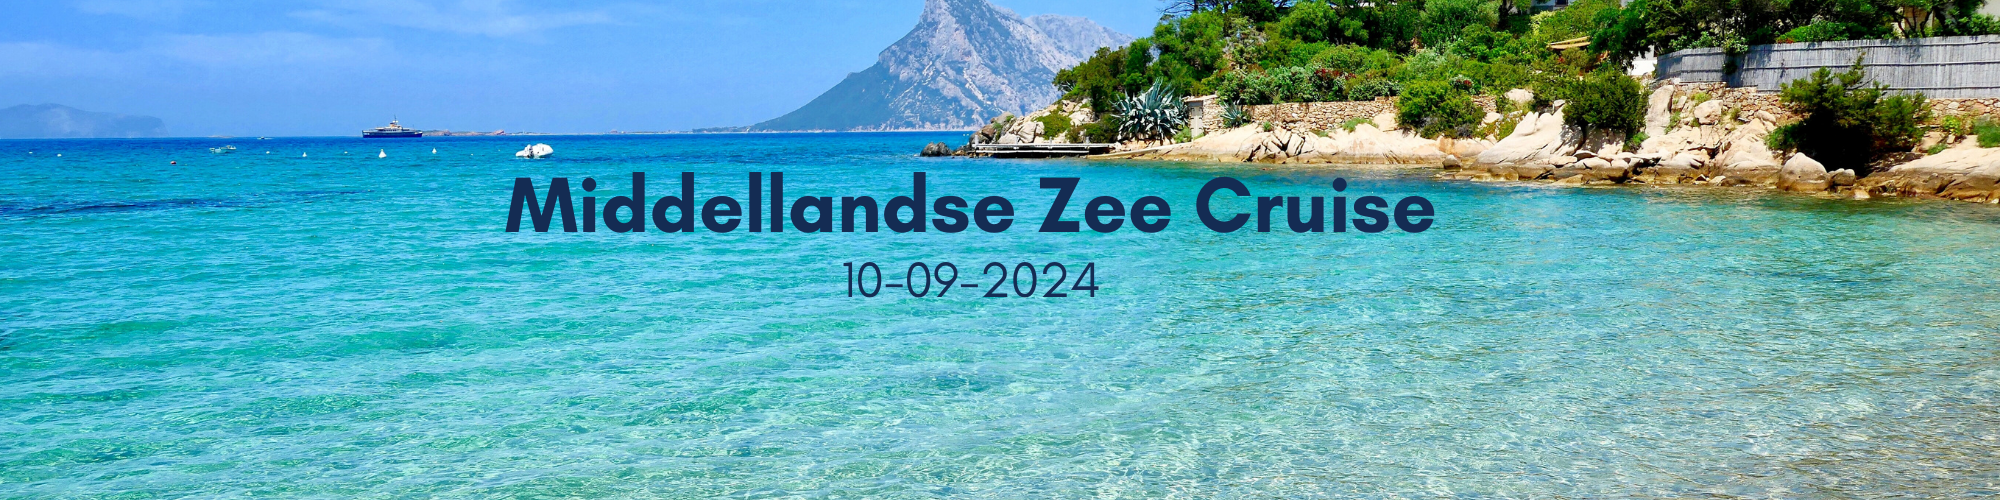 10-09-2024 Middellandse Zee Cruise